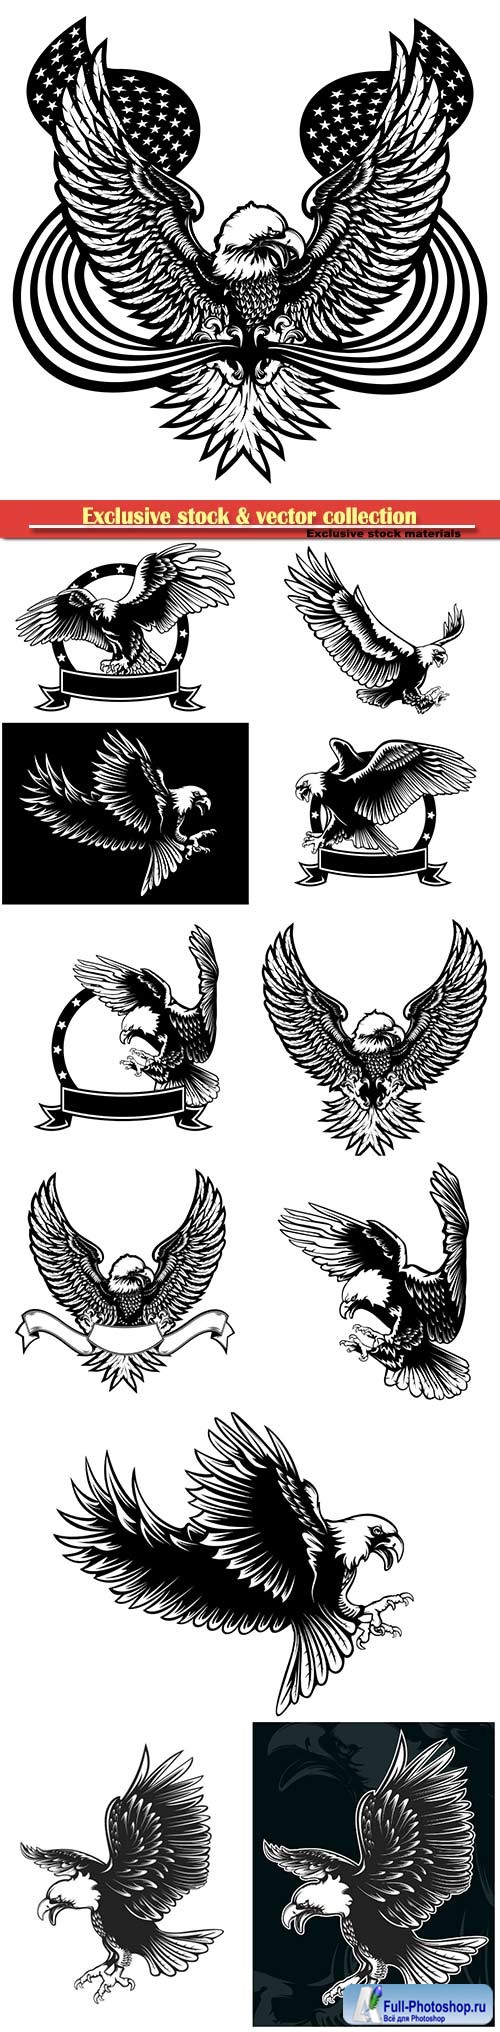 Eagle emblem vector illustration, world symbol of freedom and independence